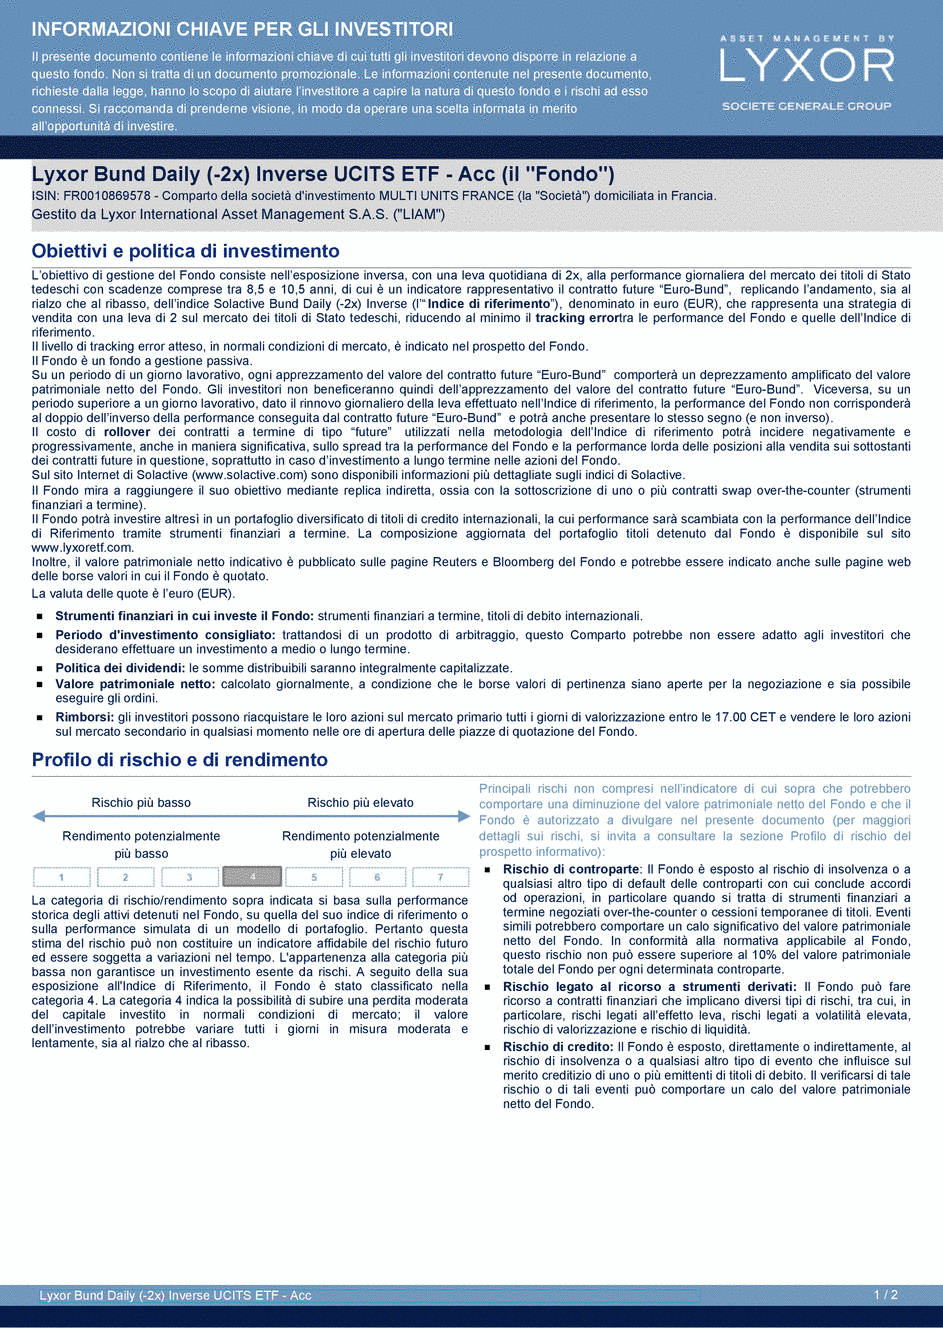 DICI Lyxor Bund Daily (-2x) Inverse UCITS ETF - Acc - 21/06/2019 - Italien